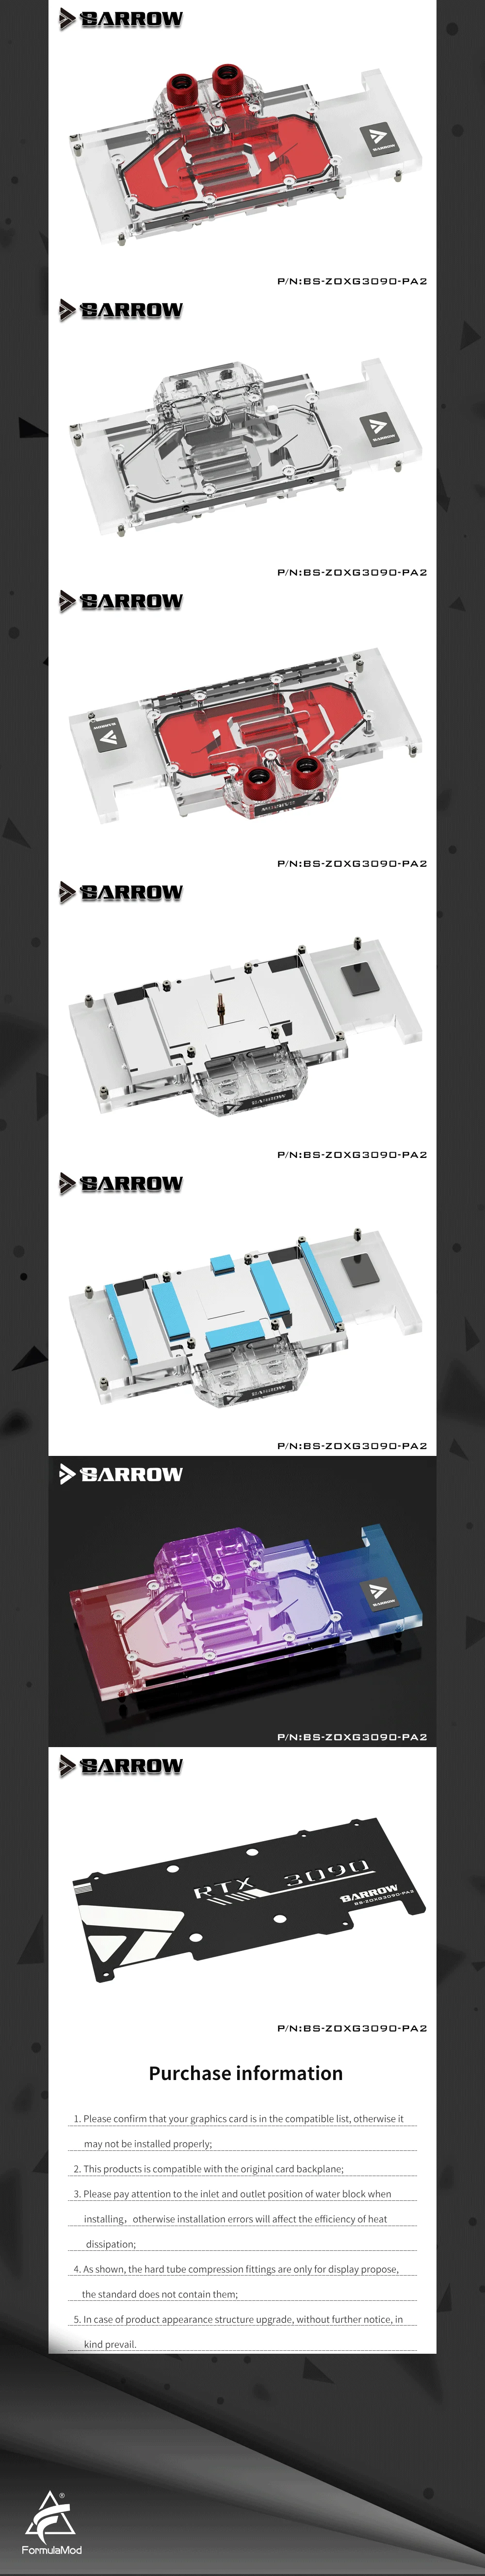 Barrow 3090 3080 GPU Water Block for ZOTAC RTX 3090 3080 X GAMING, Full Cover ARGB GPU Cooler, BS-ZOXG3090-PA2  